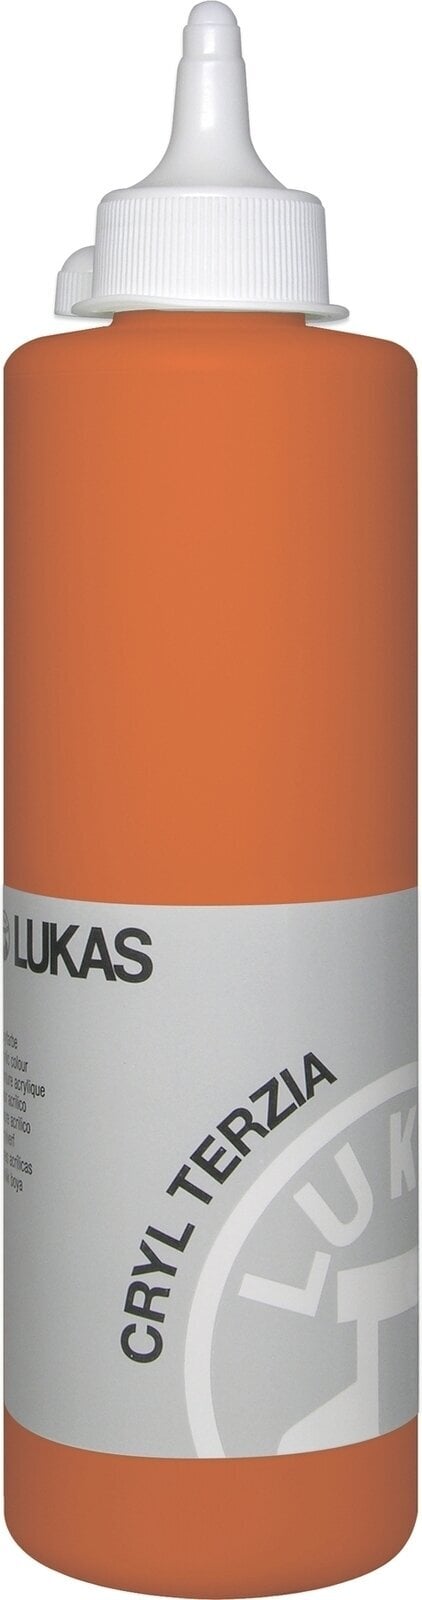 Acrylic Paint Lukas Cryl Terzia Acrylic Paint Plastic Bottle Acrylic Paint Cadmium Orange Hue 500 ml 1 pc